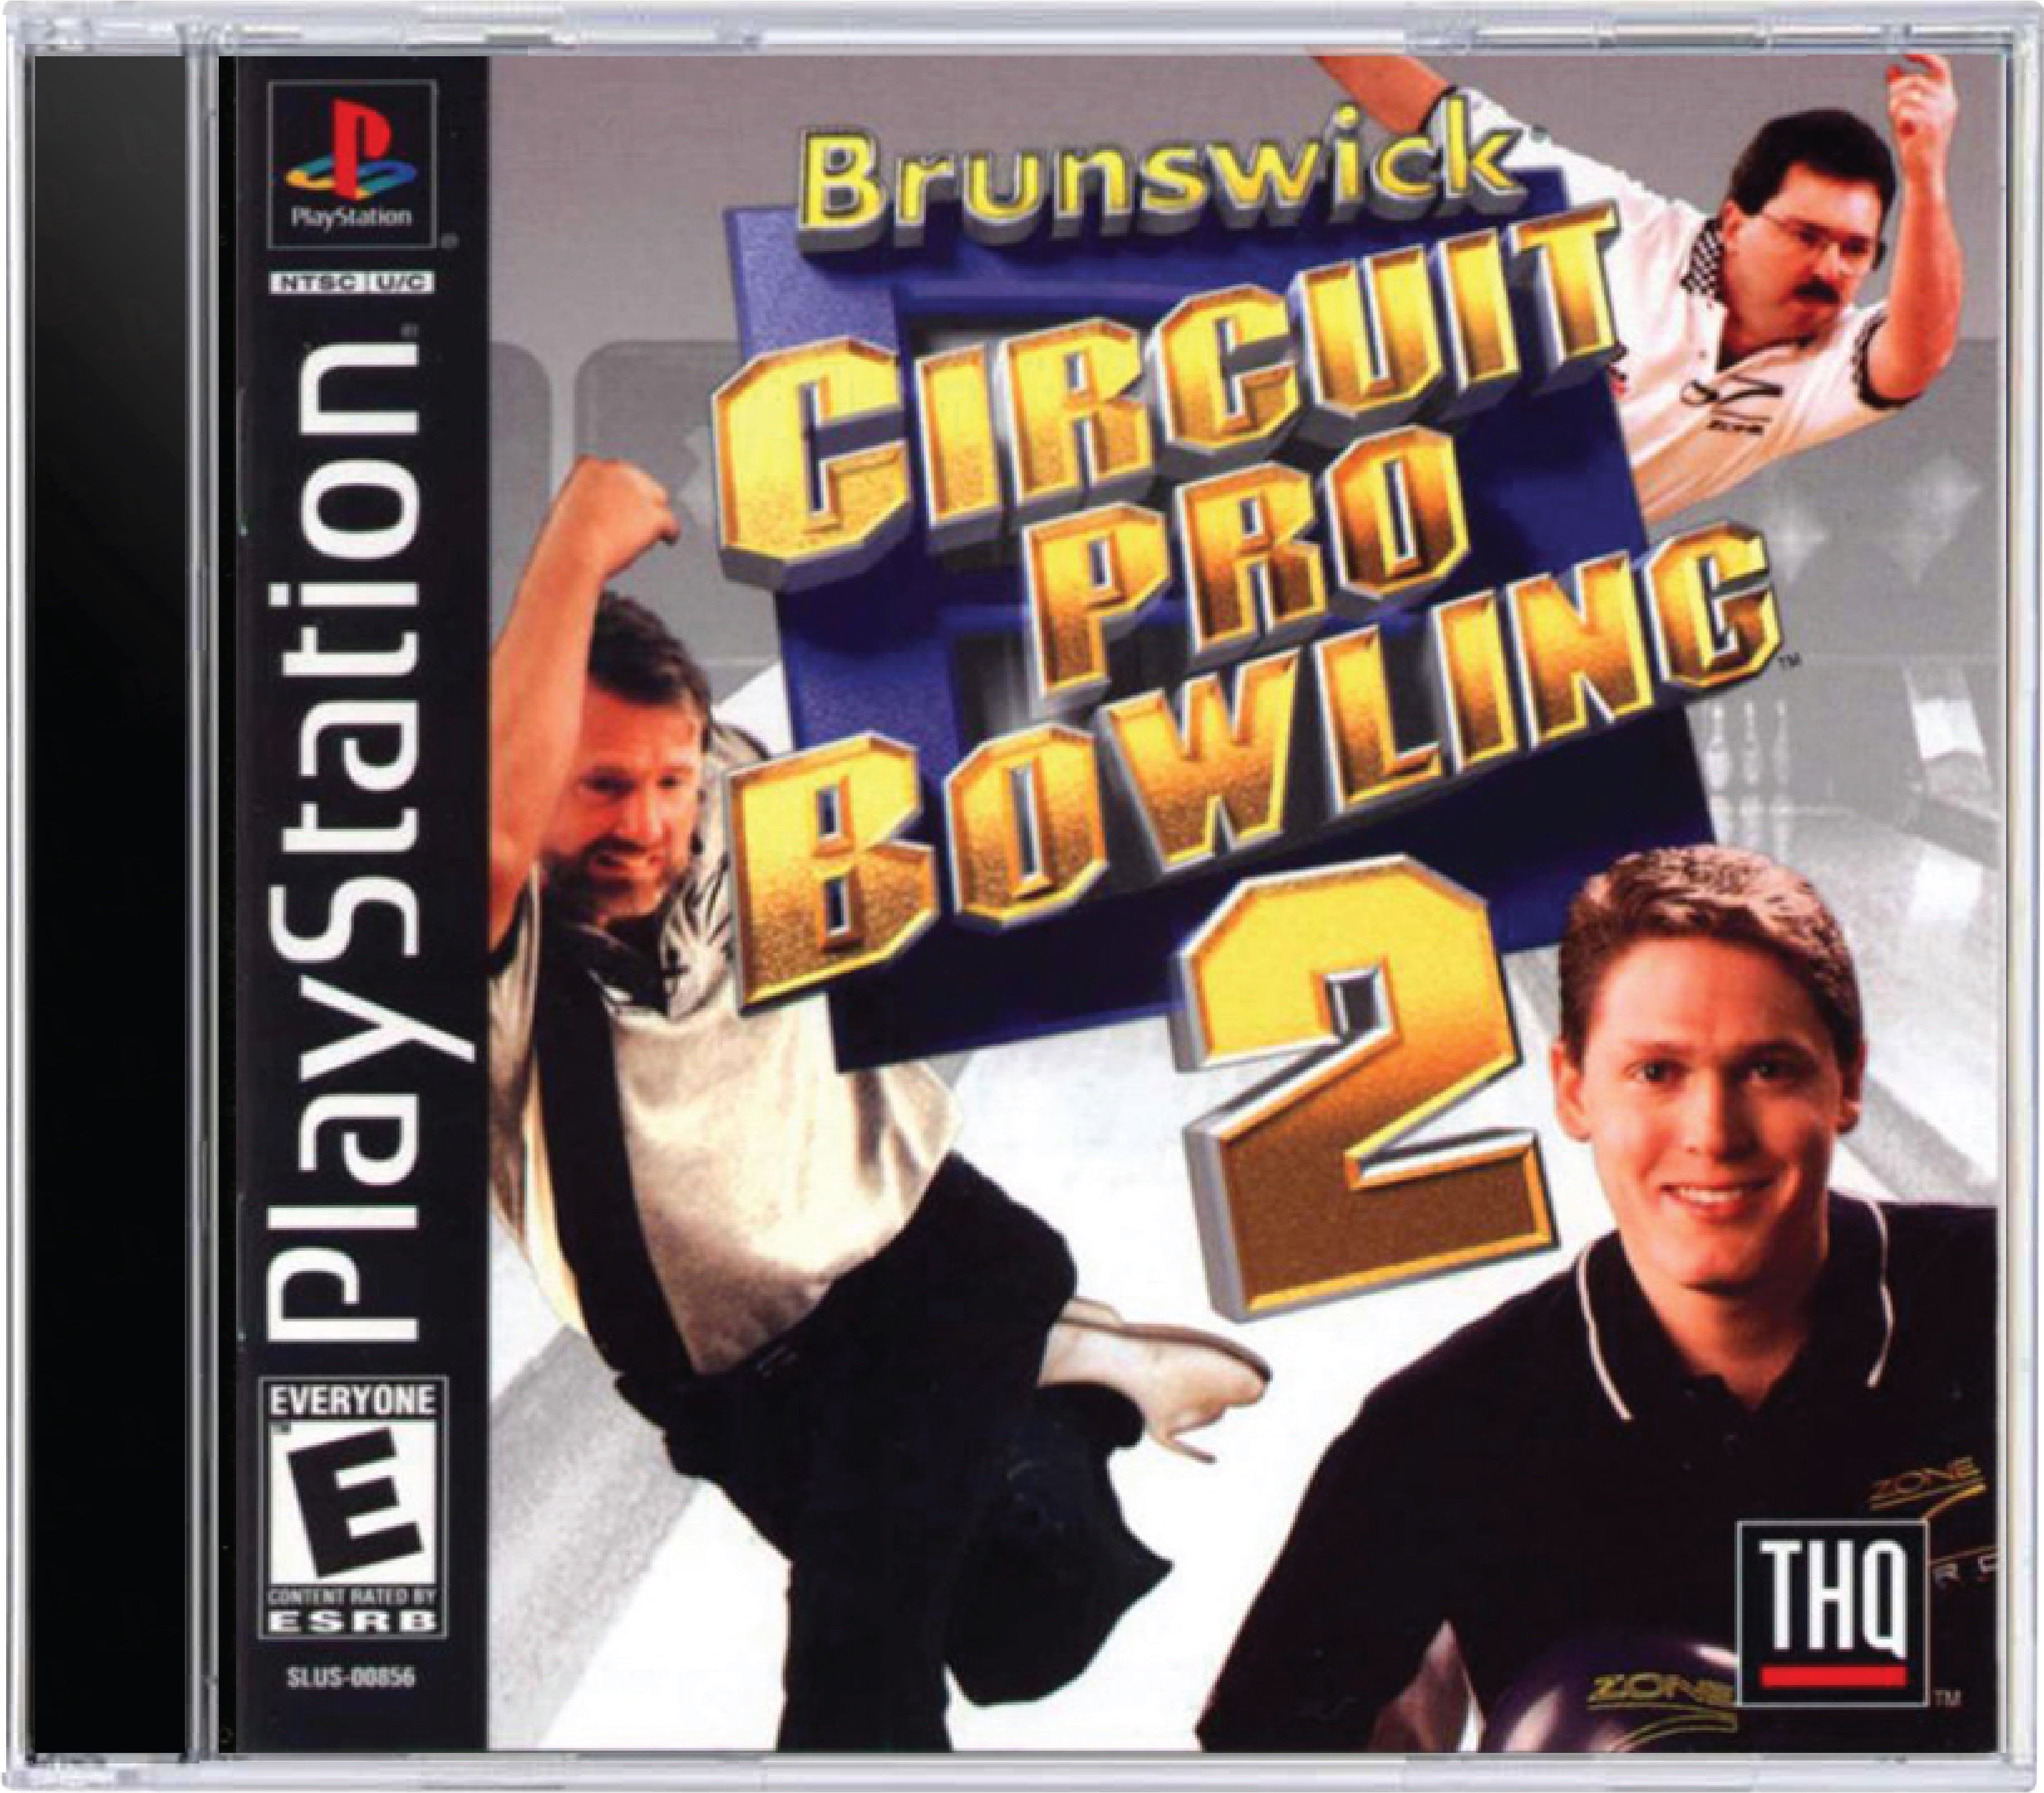 Brunswick Circuit Pro Bowling 2 Cover Art and Product Photo